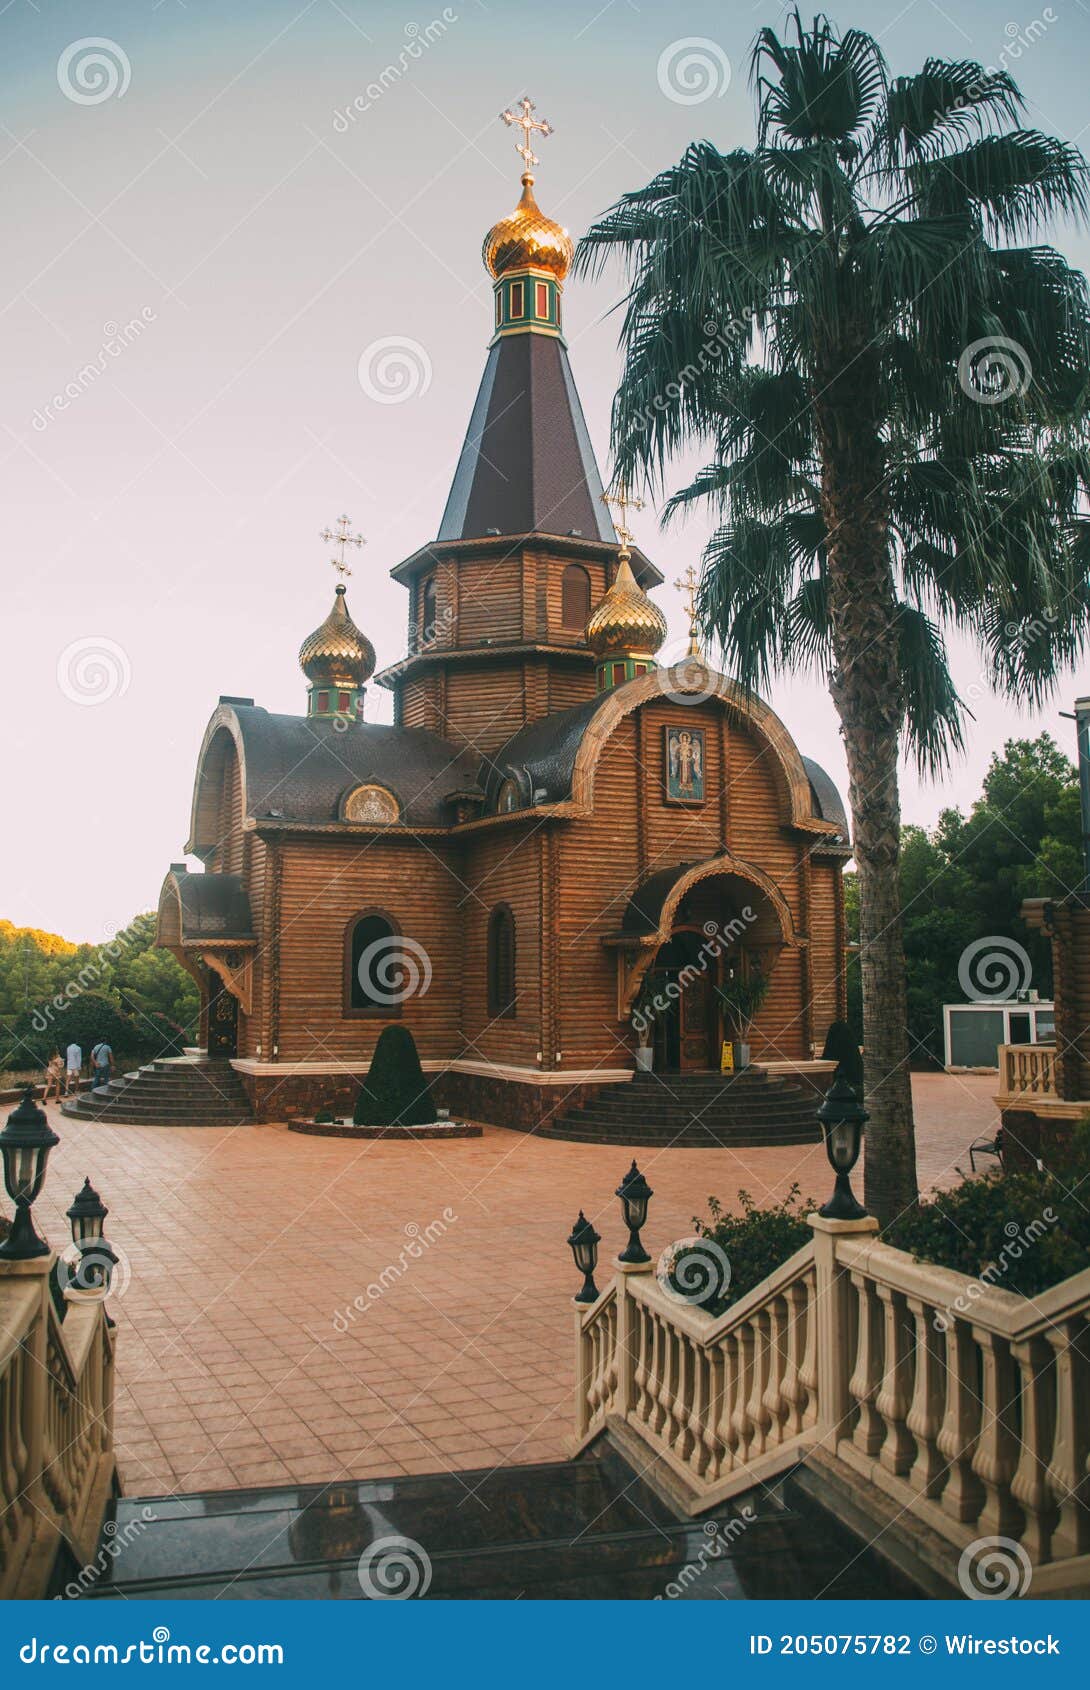 vertical shot of the iglesia ortodoxa rusa san miguel arcangel in alicante, valencia, spain